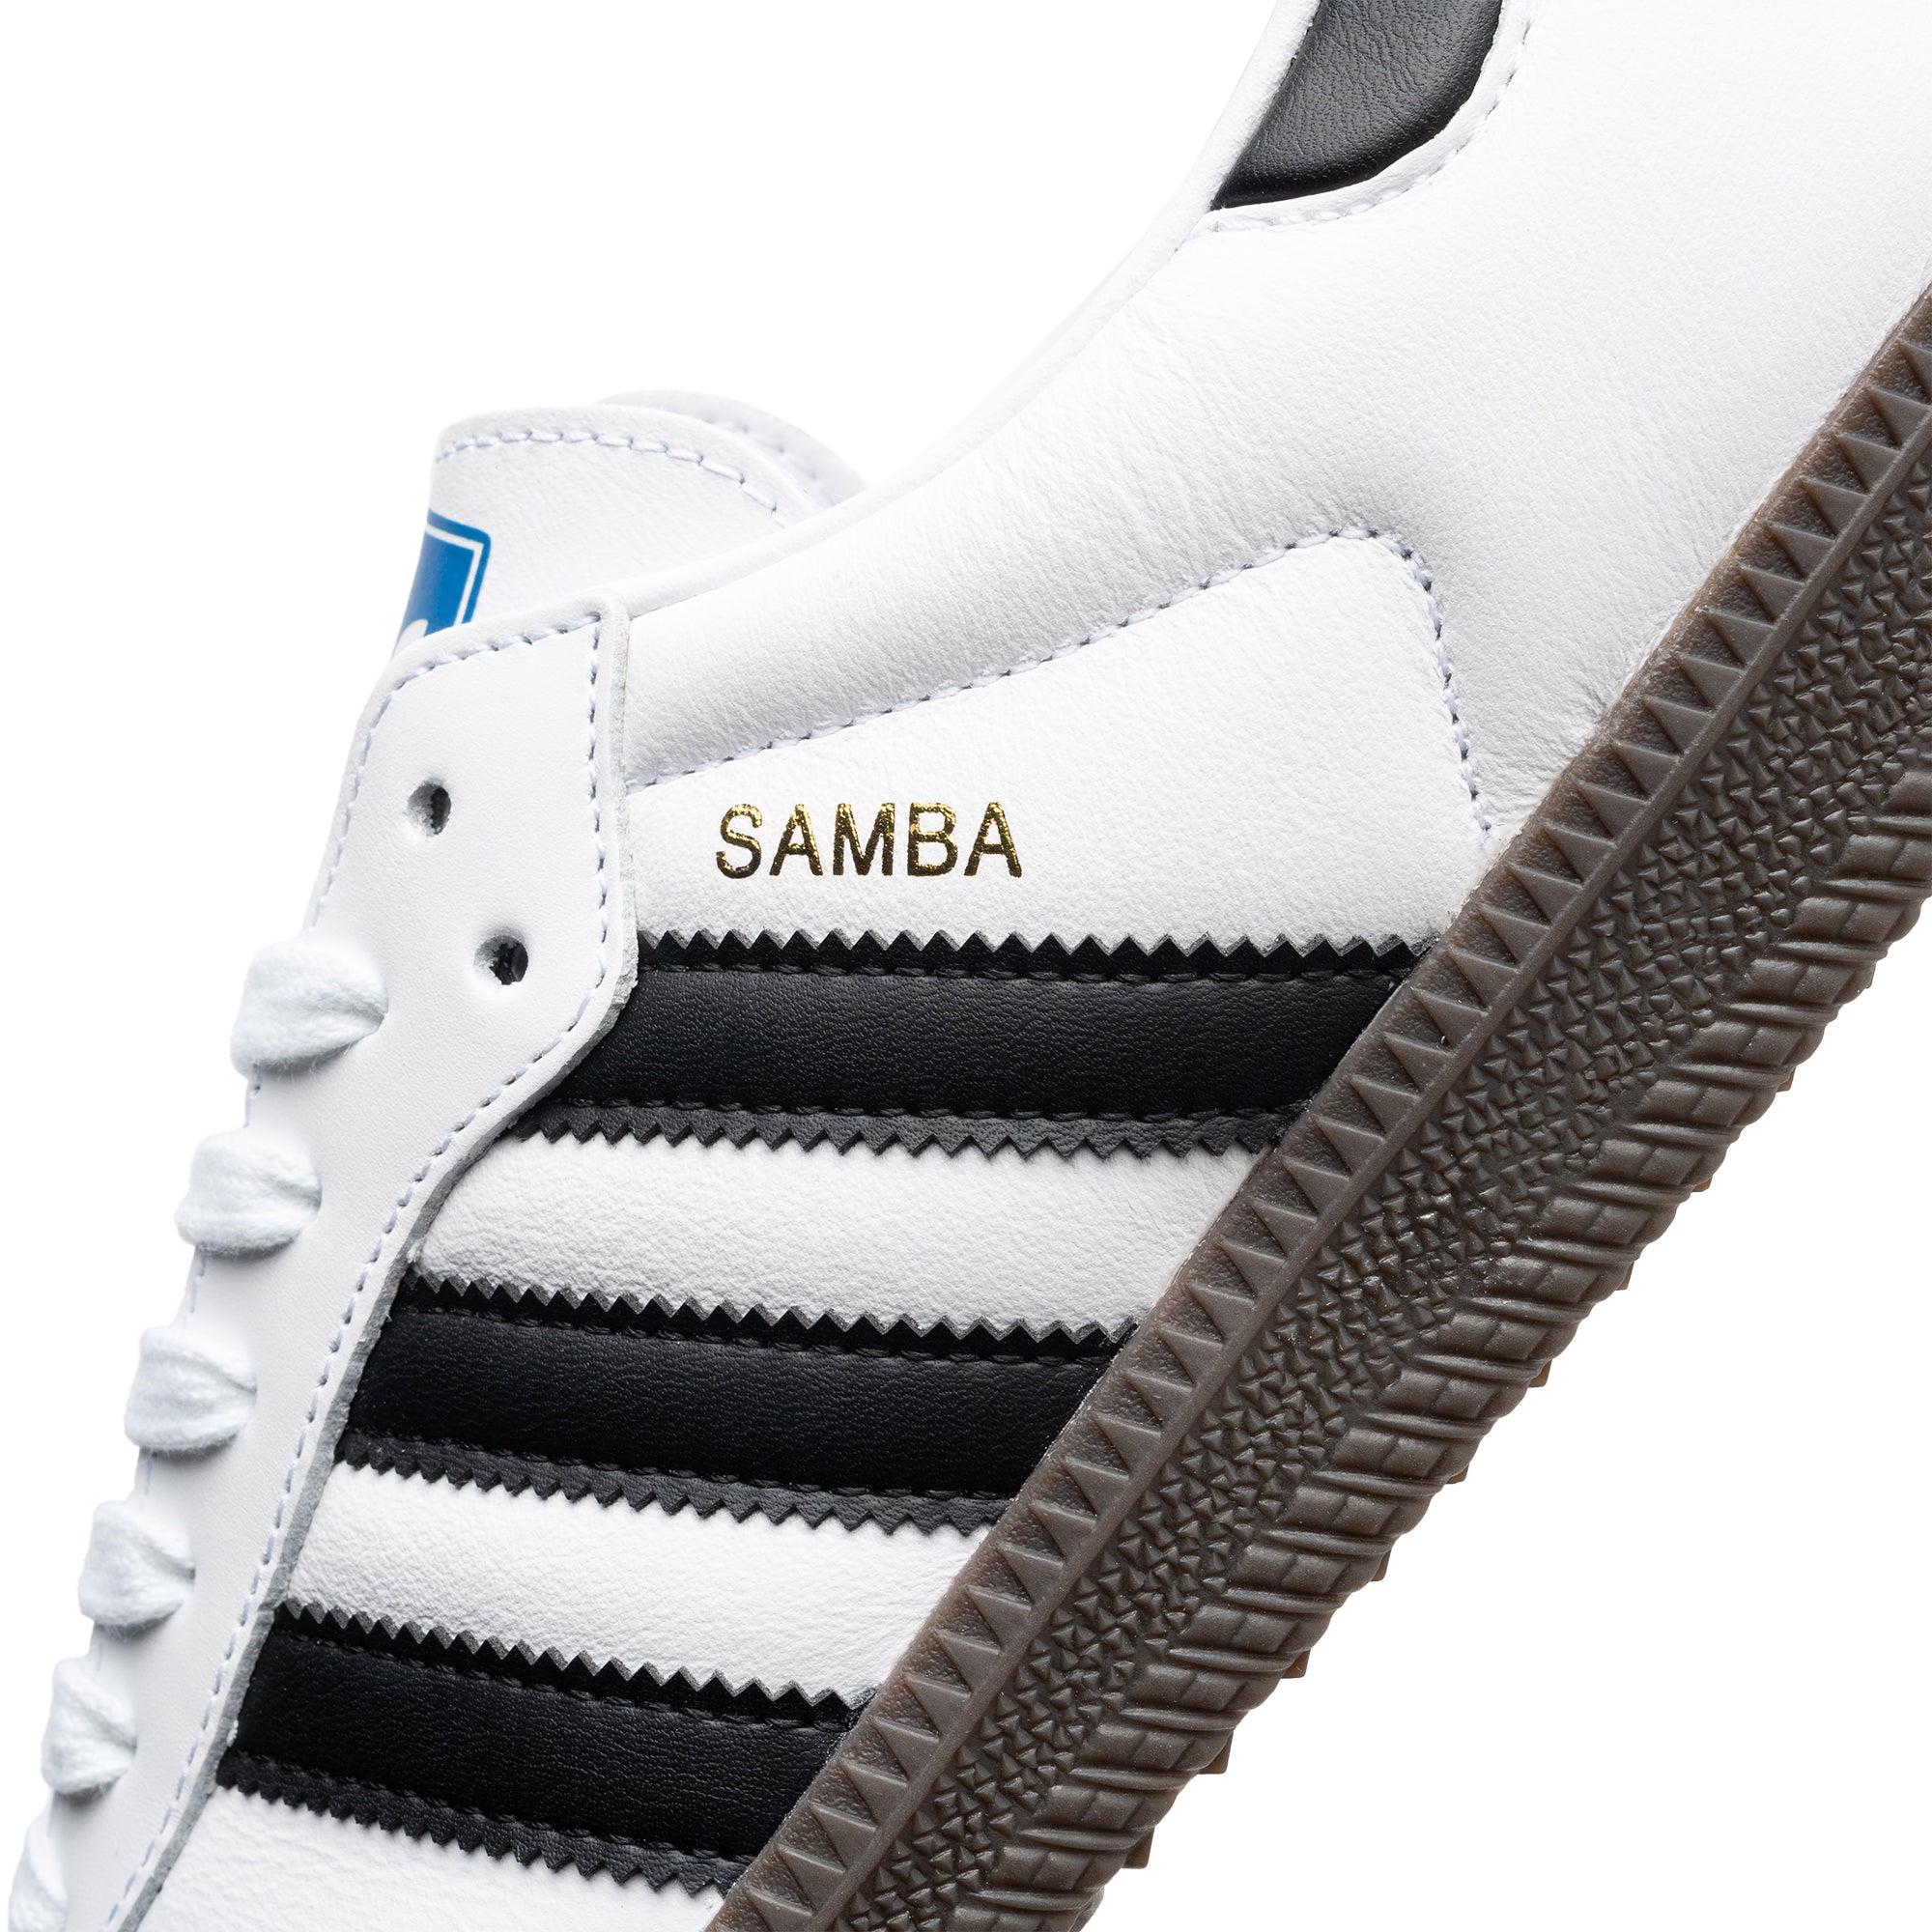 Adidas Samba OG B75806 White